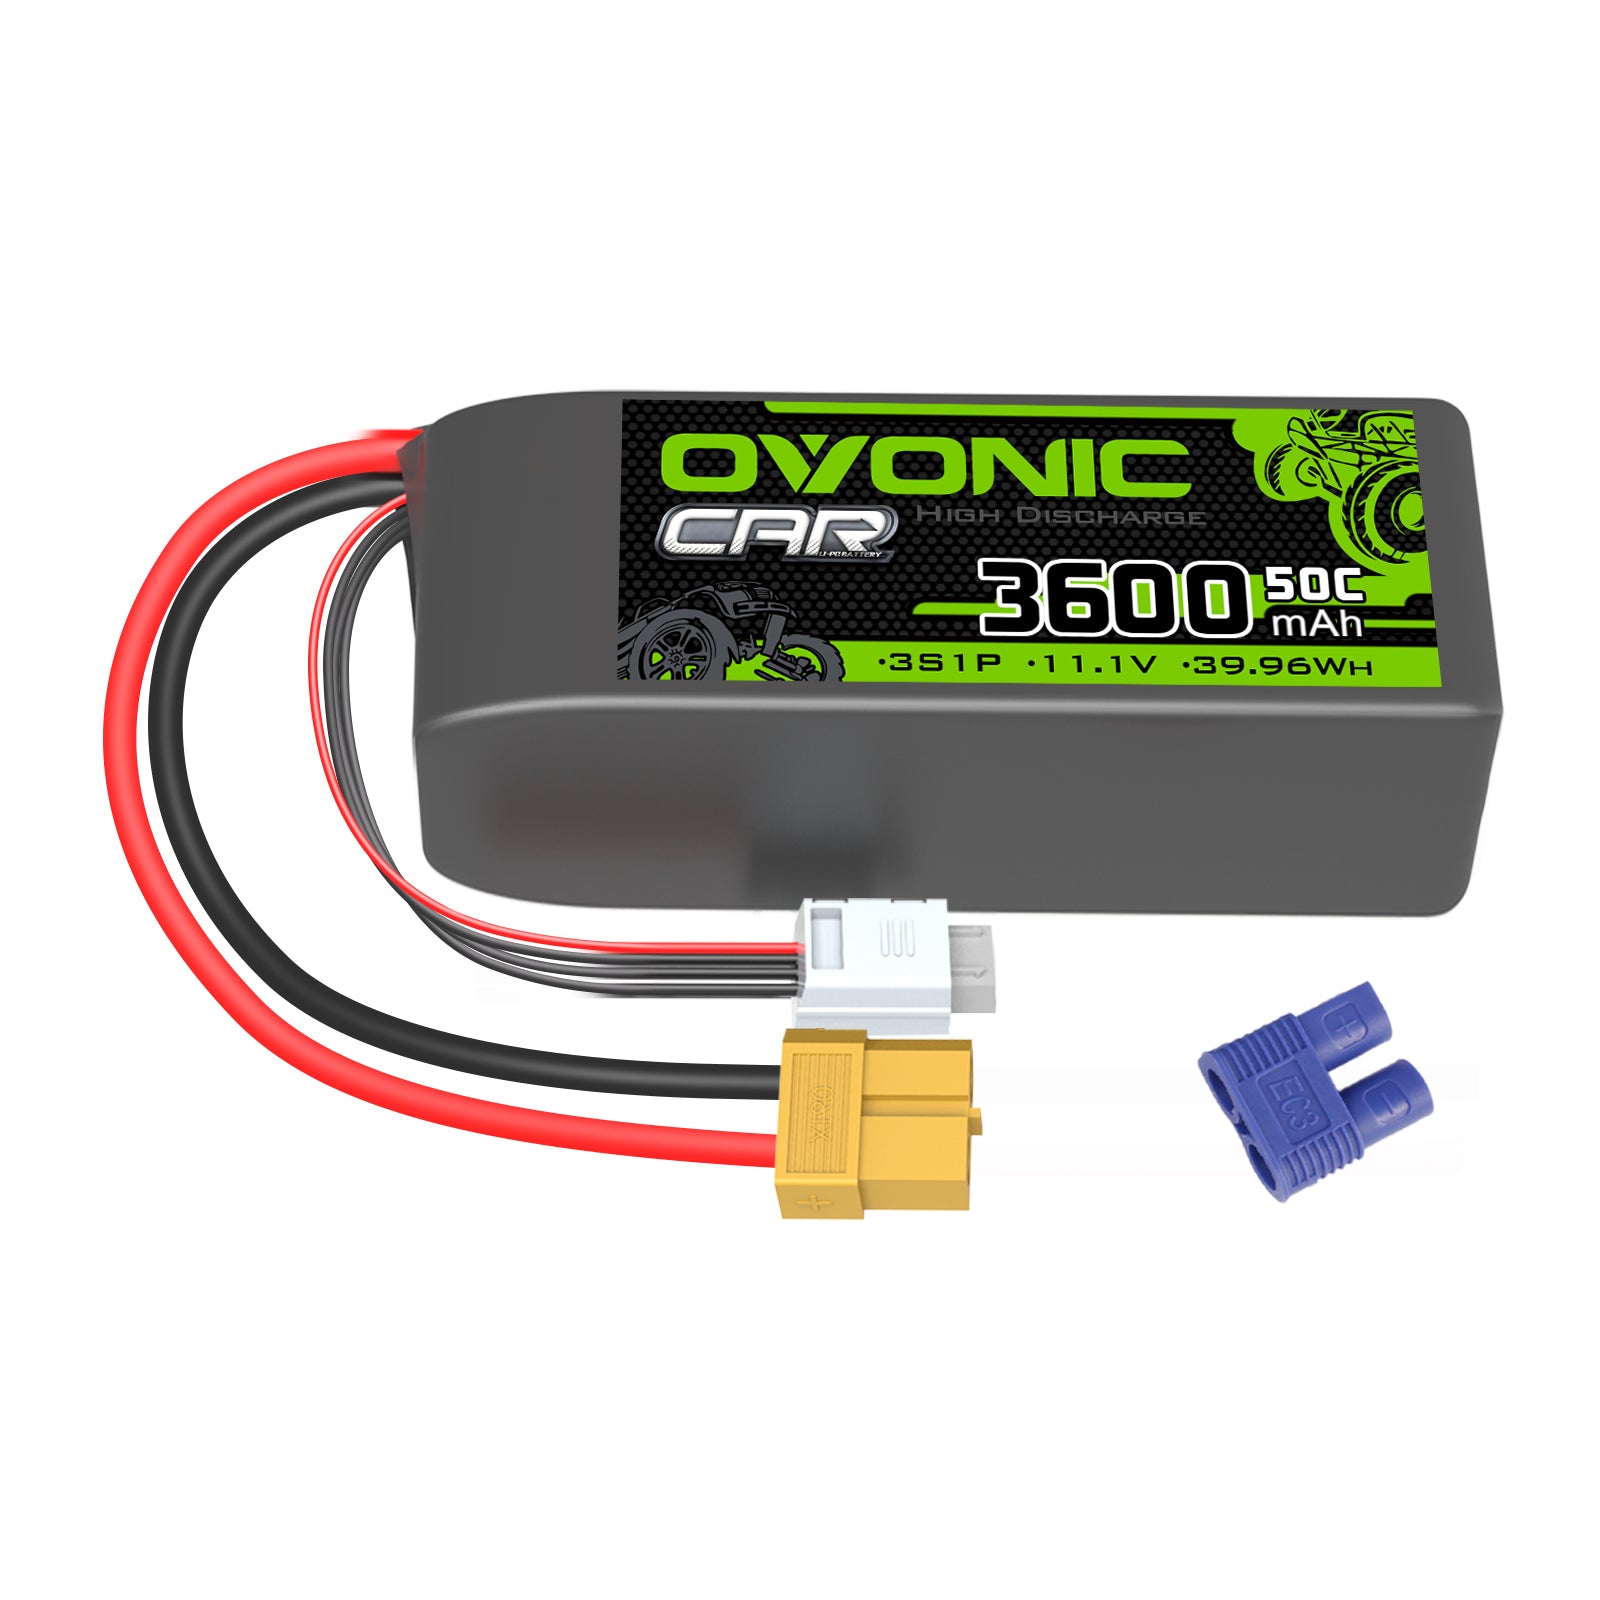 Ovonic 3S 3600mAh 50C 11.1V LiPo Battery for 1/10 Rock Crawler - XT60 & EC3 Plug